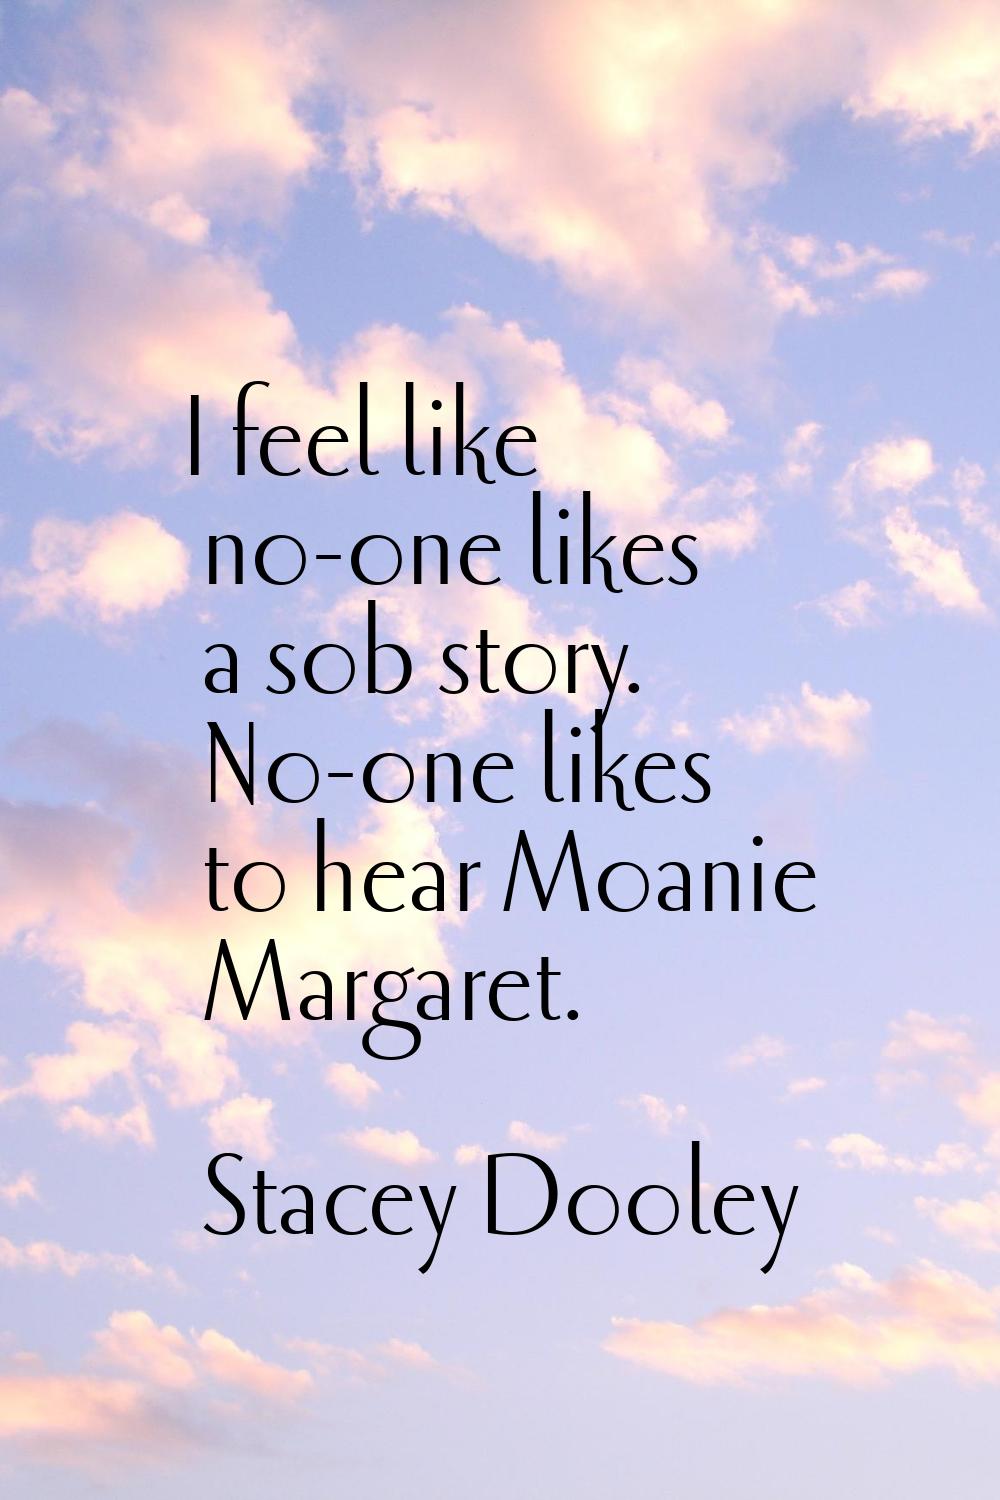 I feel like no-one likes a sob story. No-one likes to hear Moanie Margaret.